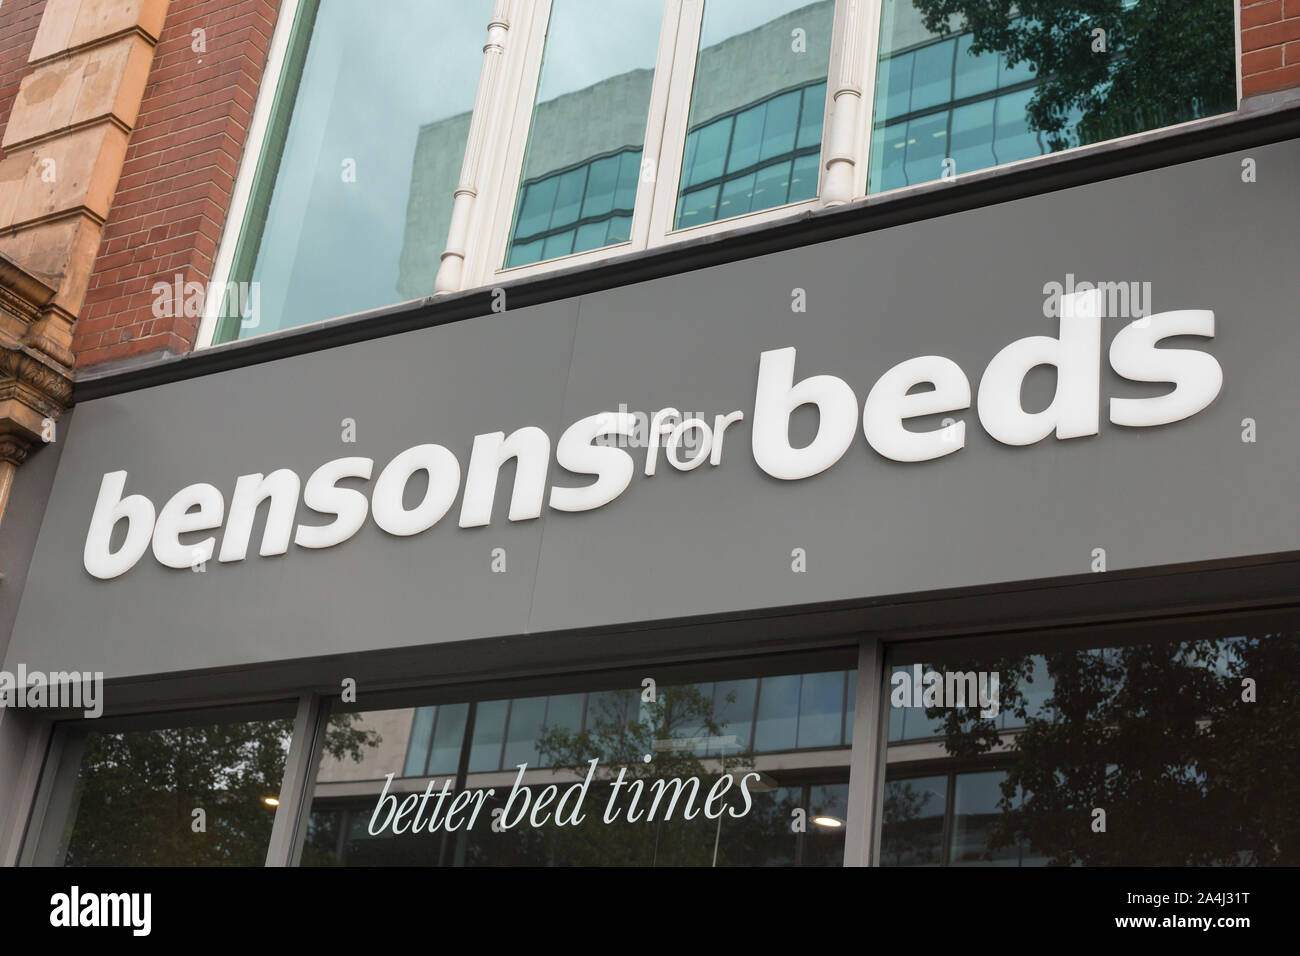 bensons for beds sign logo, London, England Stock Photo